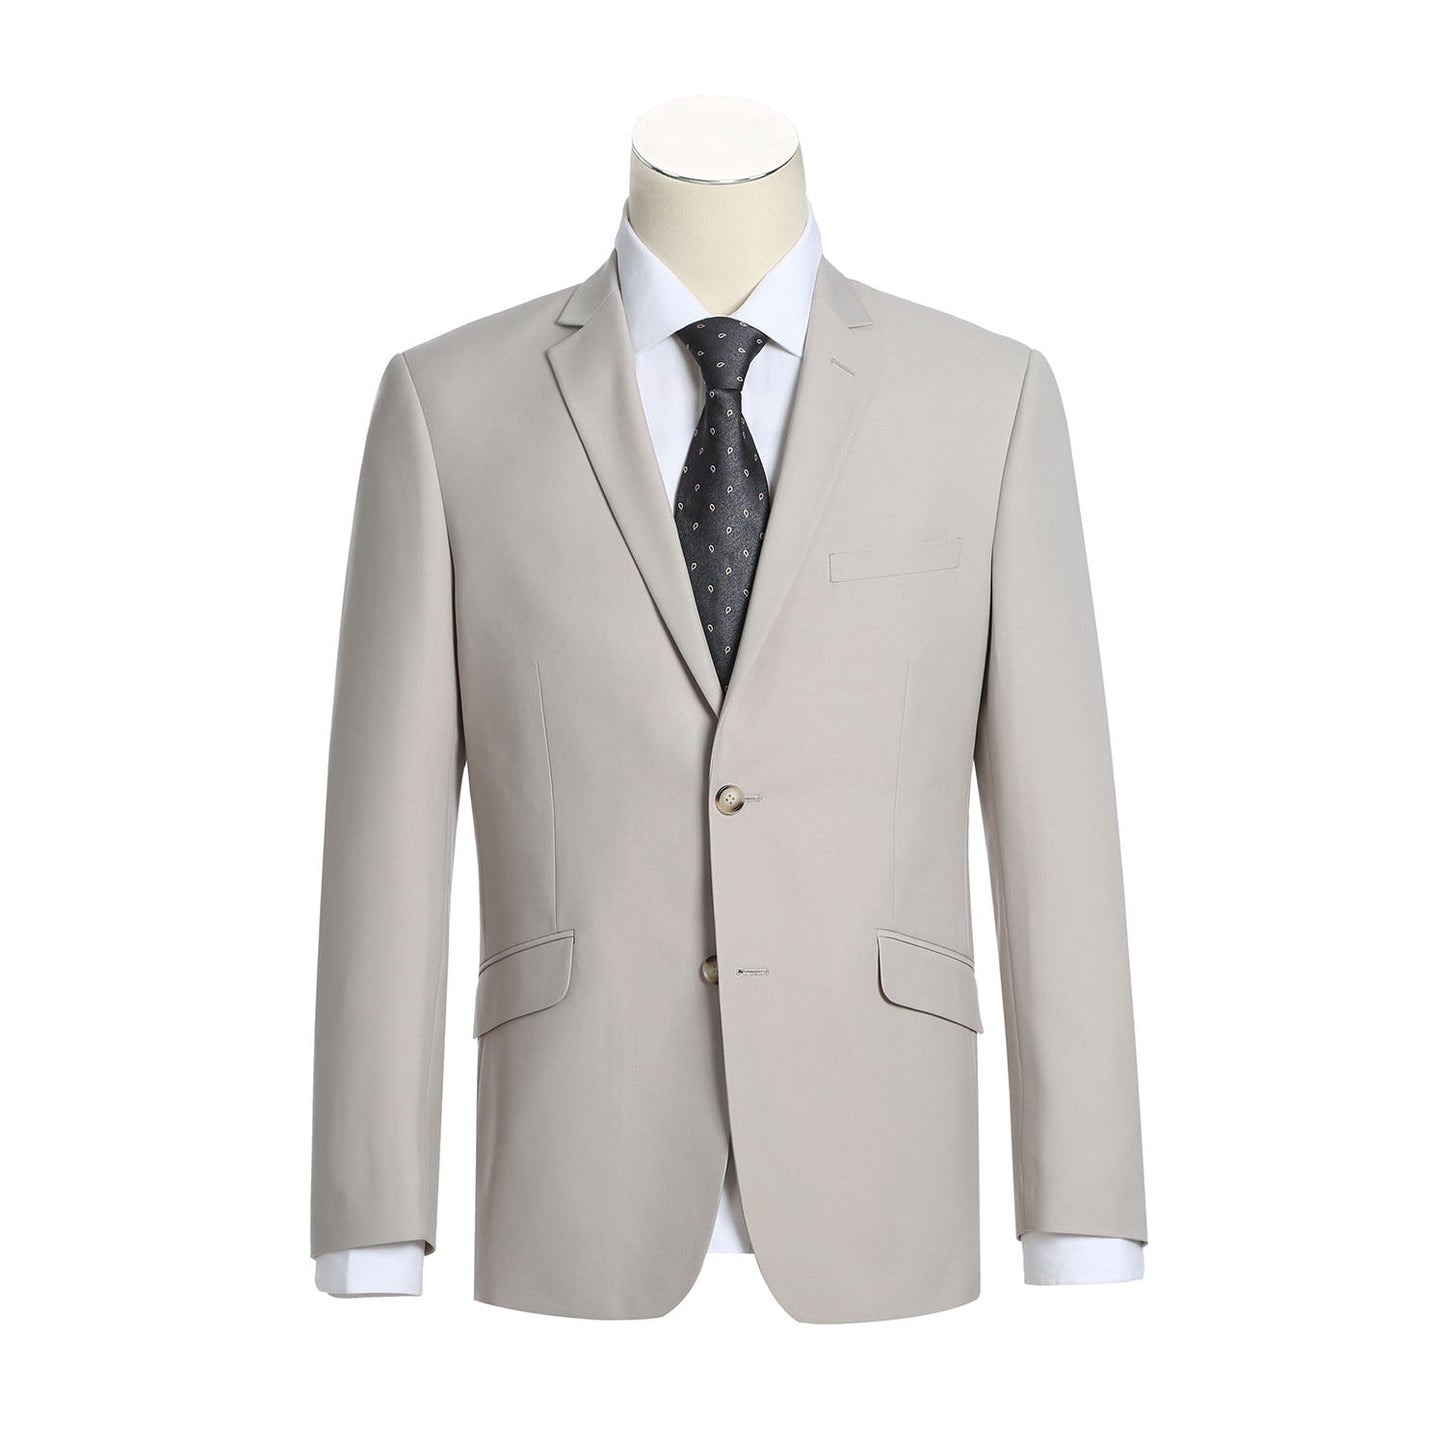 201-84 Men's 2-Piece Single Breasted Beige Notch Lapel Suit